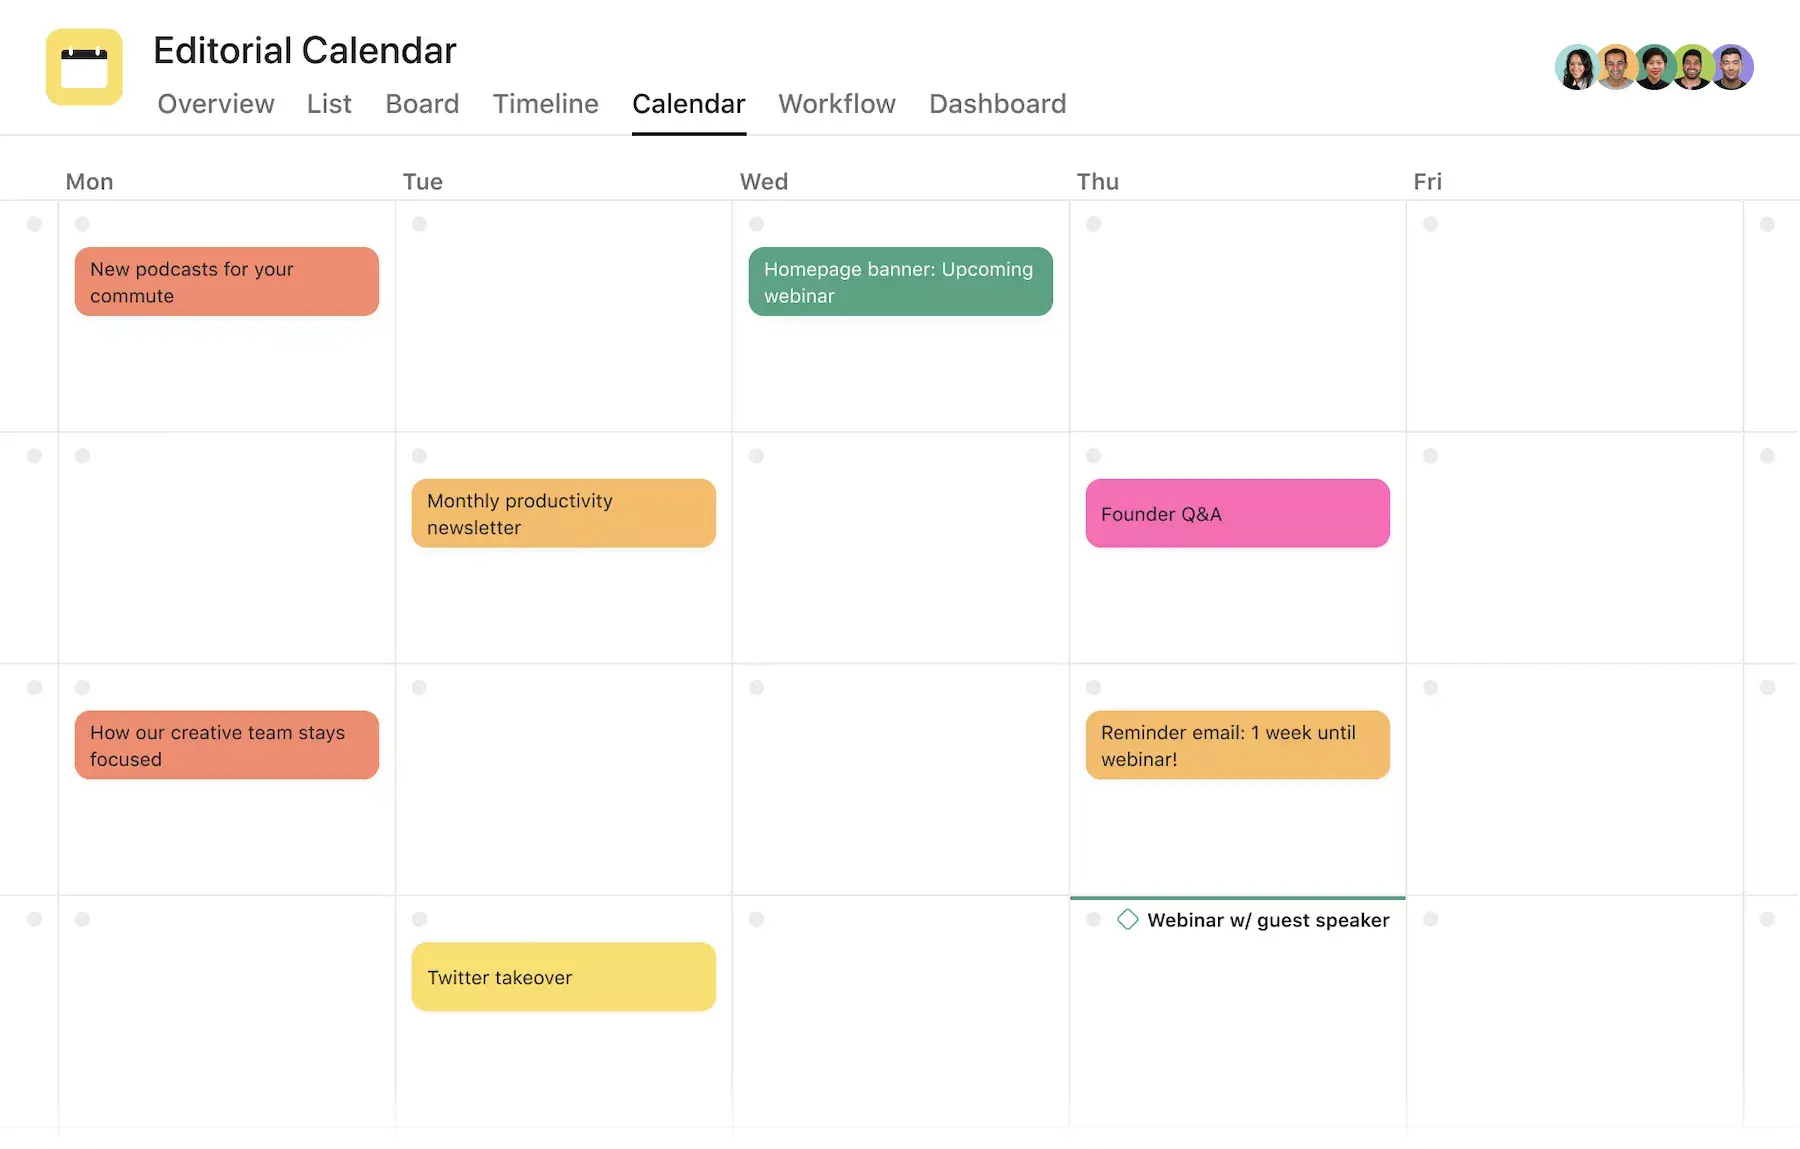 [UI Produk] Proyek kalender editorial di Asana (Tampilan Kalender)